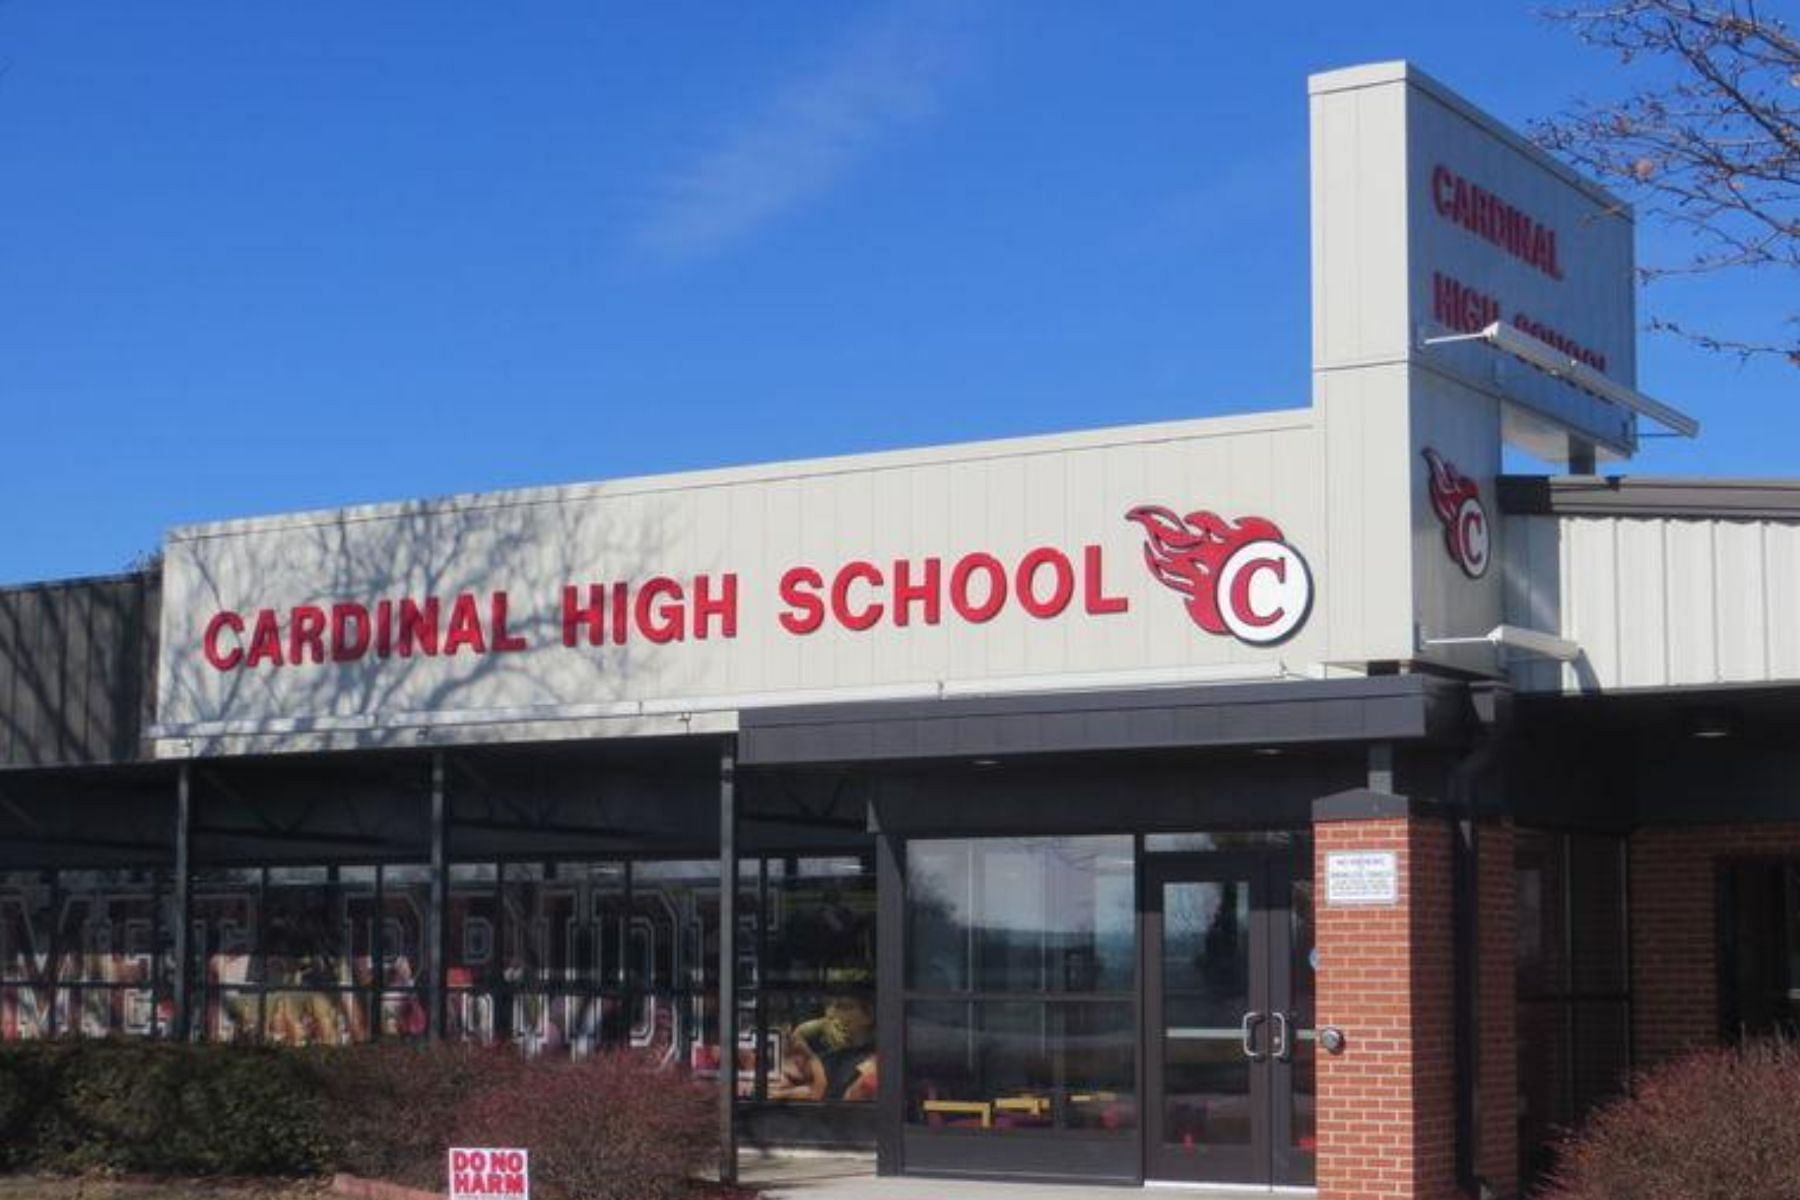 Cardinal High School (Image via Courier File)